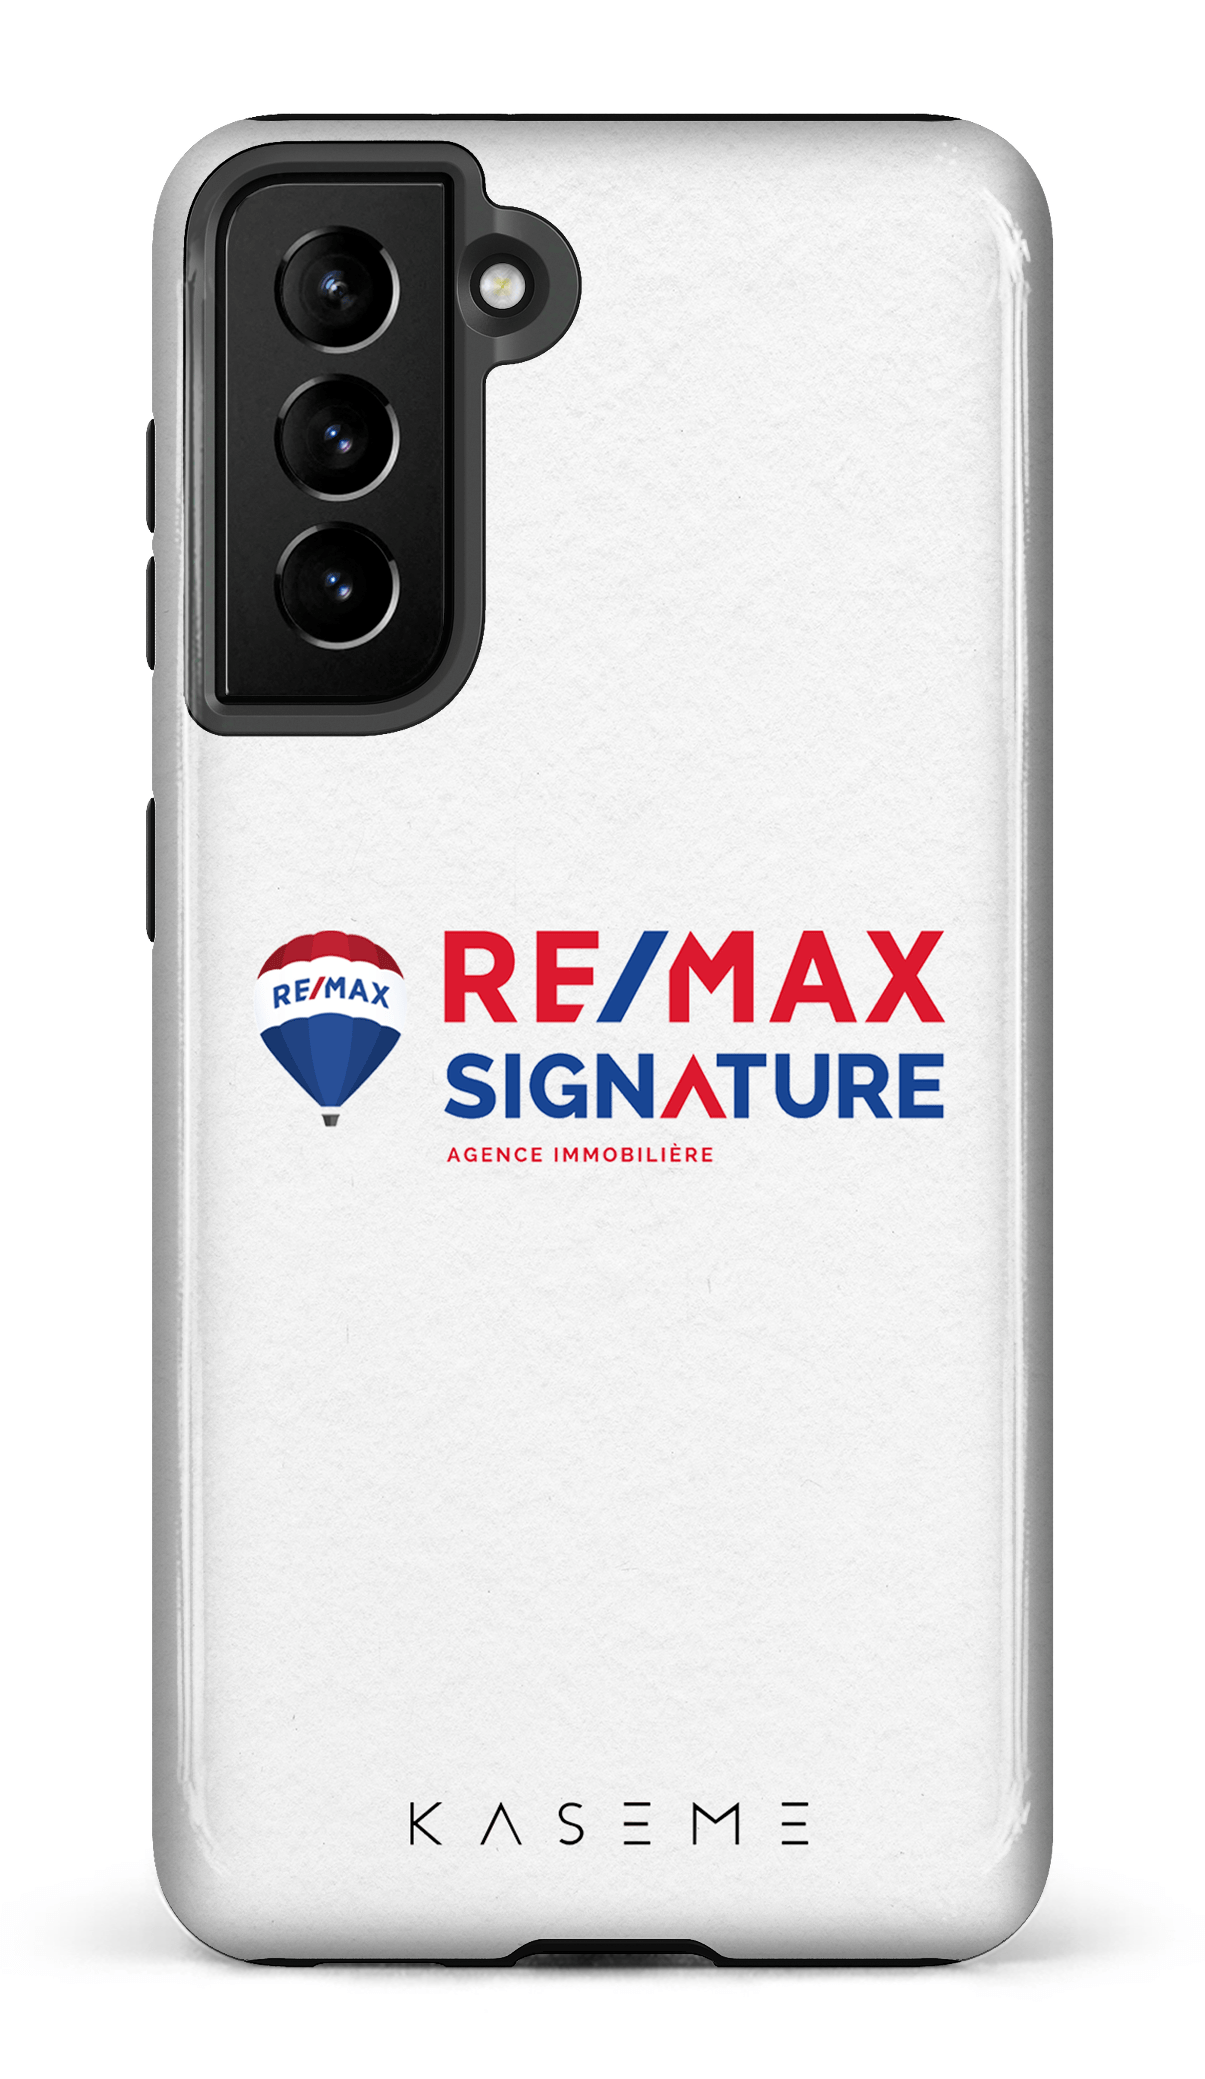 Remax Signature Blanc - Galaxy S21